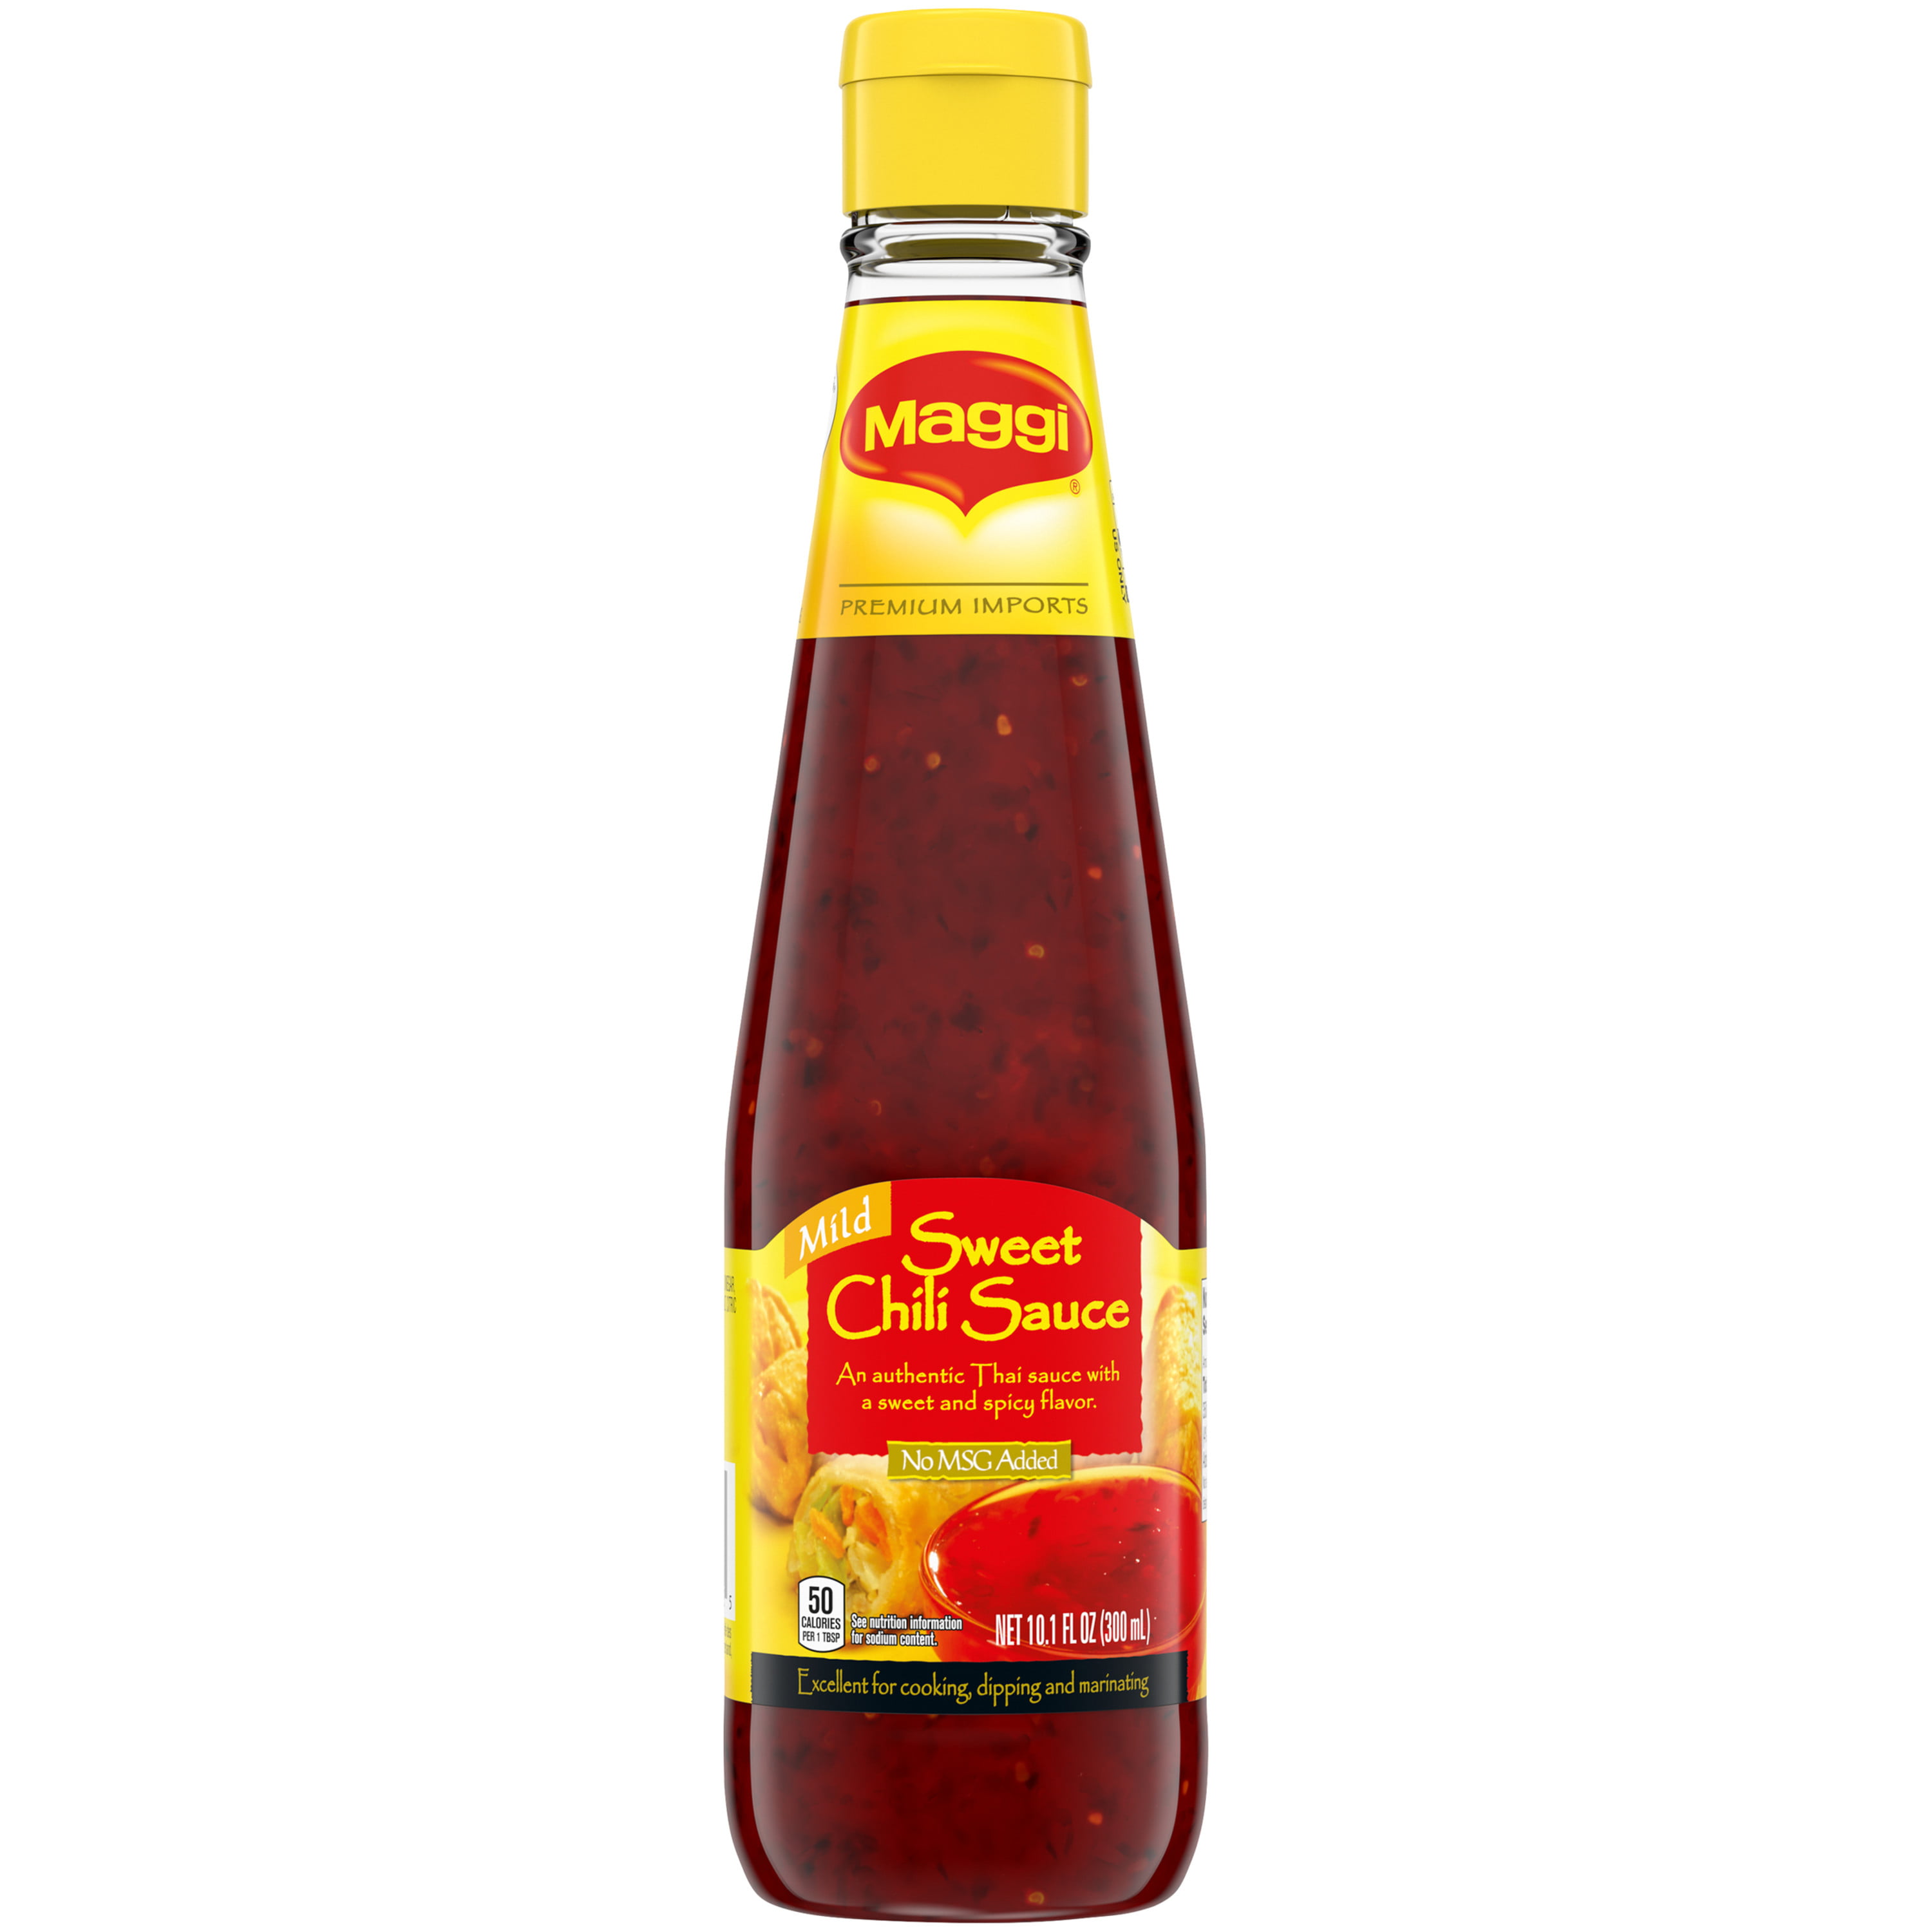 Maggi Mild Sweet Chili Sauce 11.43 oz. - Walmart.com - Walmart.com